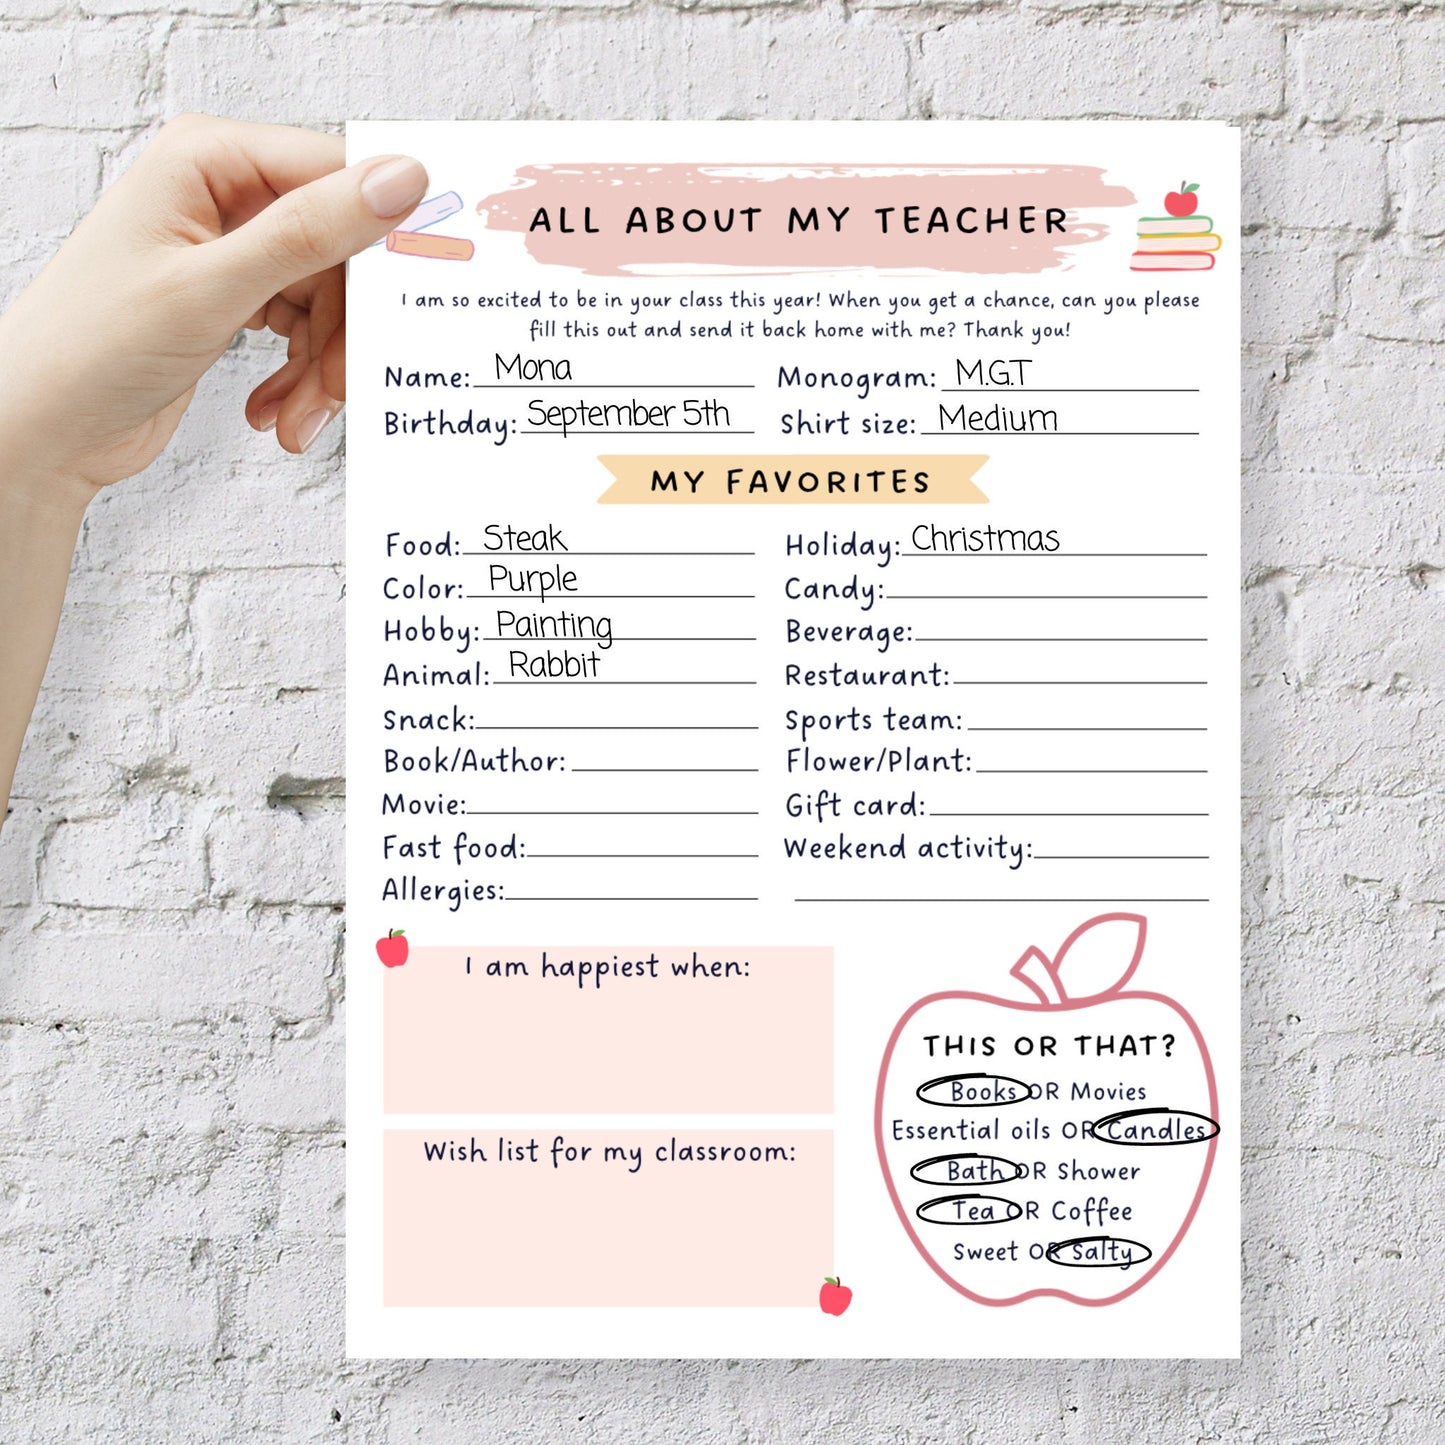 All About My Teacher Survey, Back to School Teacher Questionnaire Printable, Teacher Favorites, Teacher Appreciation, Get to Know Teacher